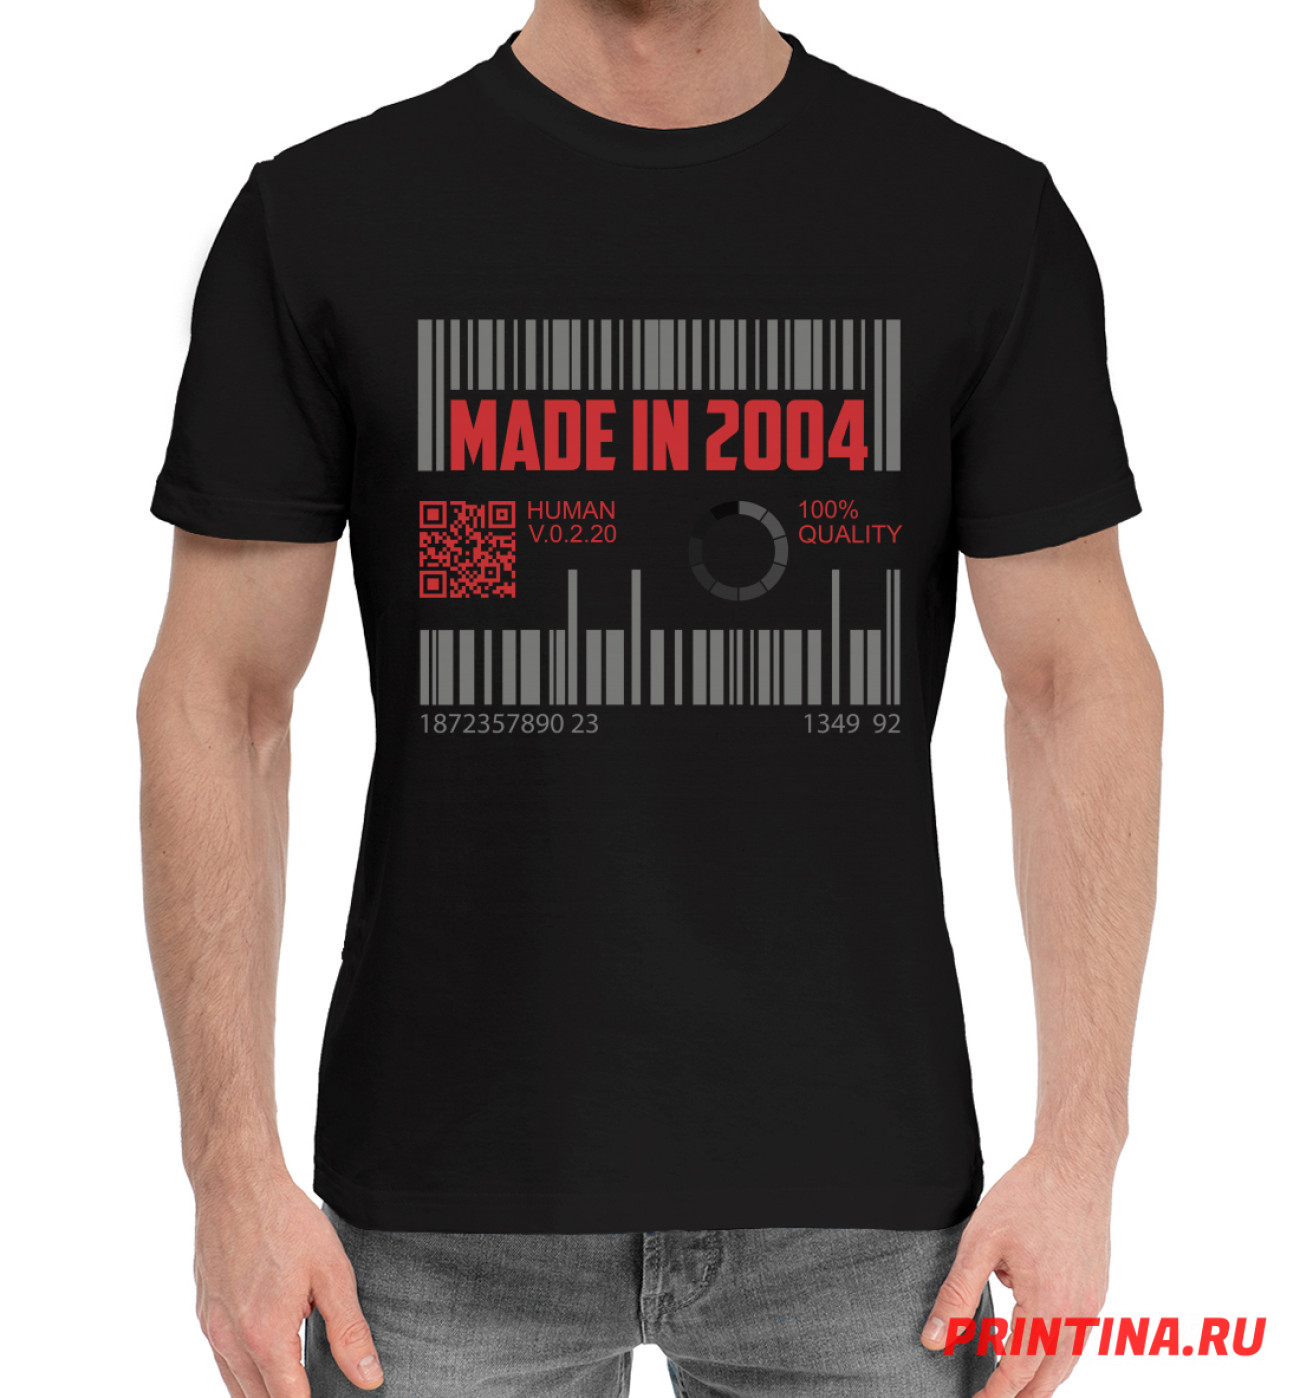 Мужская Хлопковая футболка Made in 2004, артикул: D04-453780-hfu-2